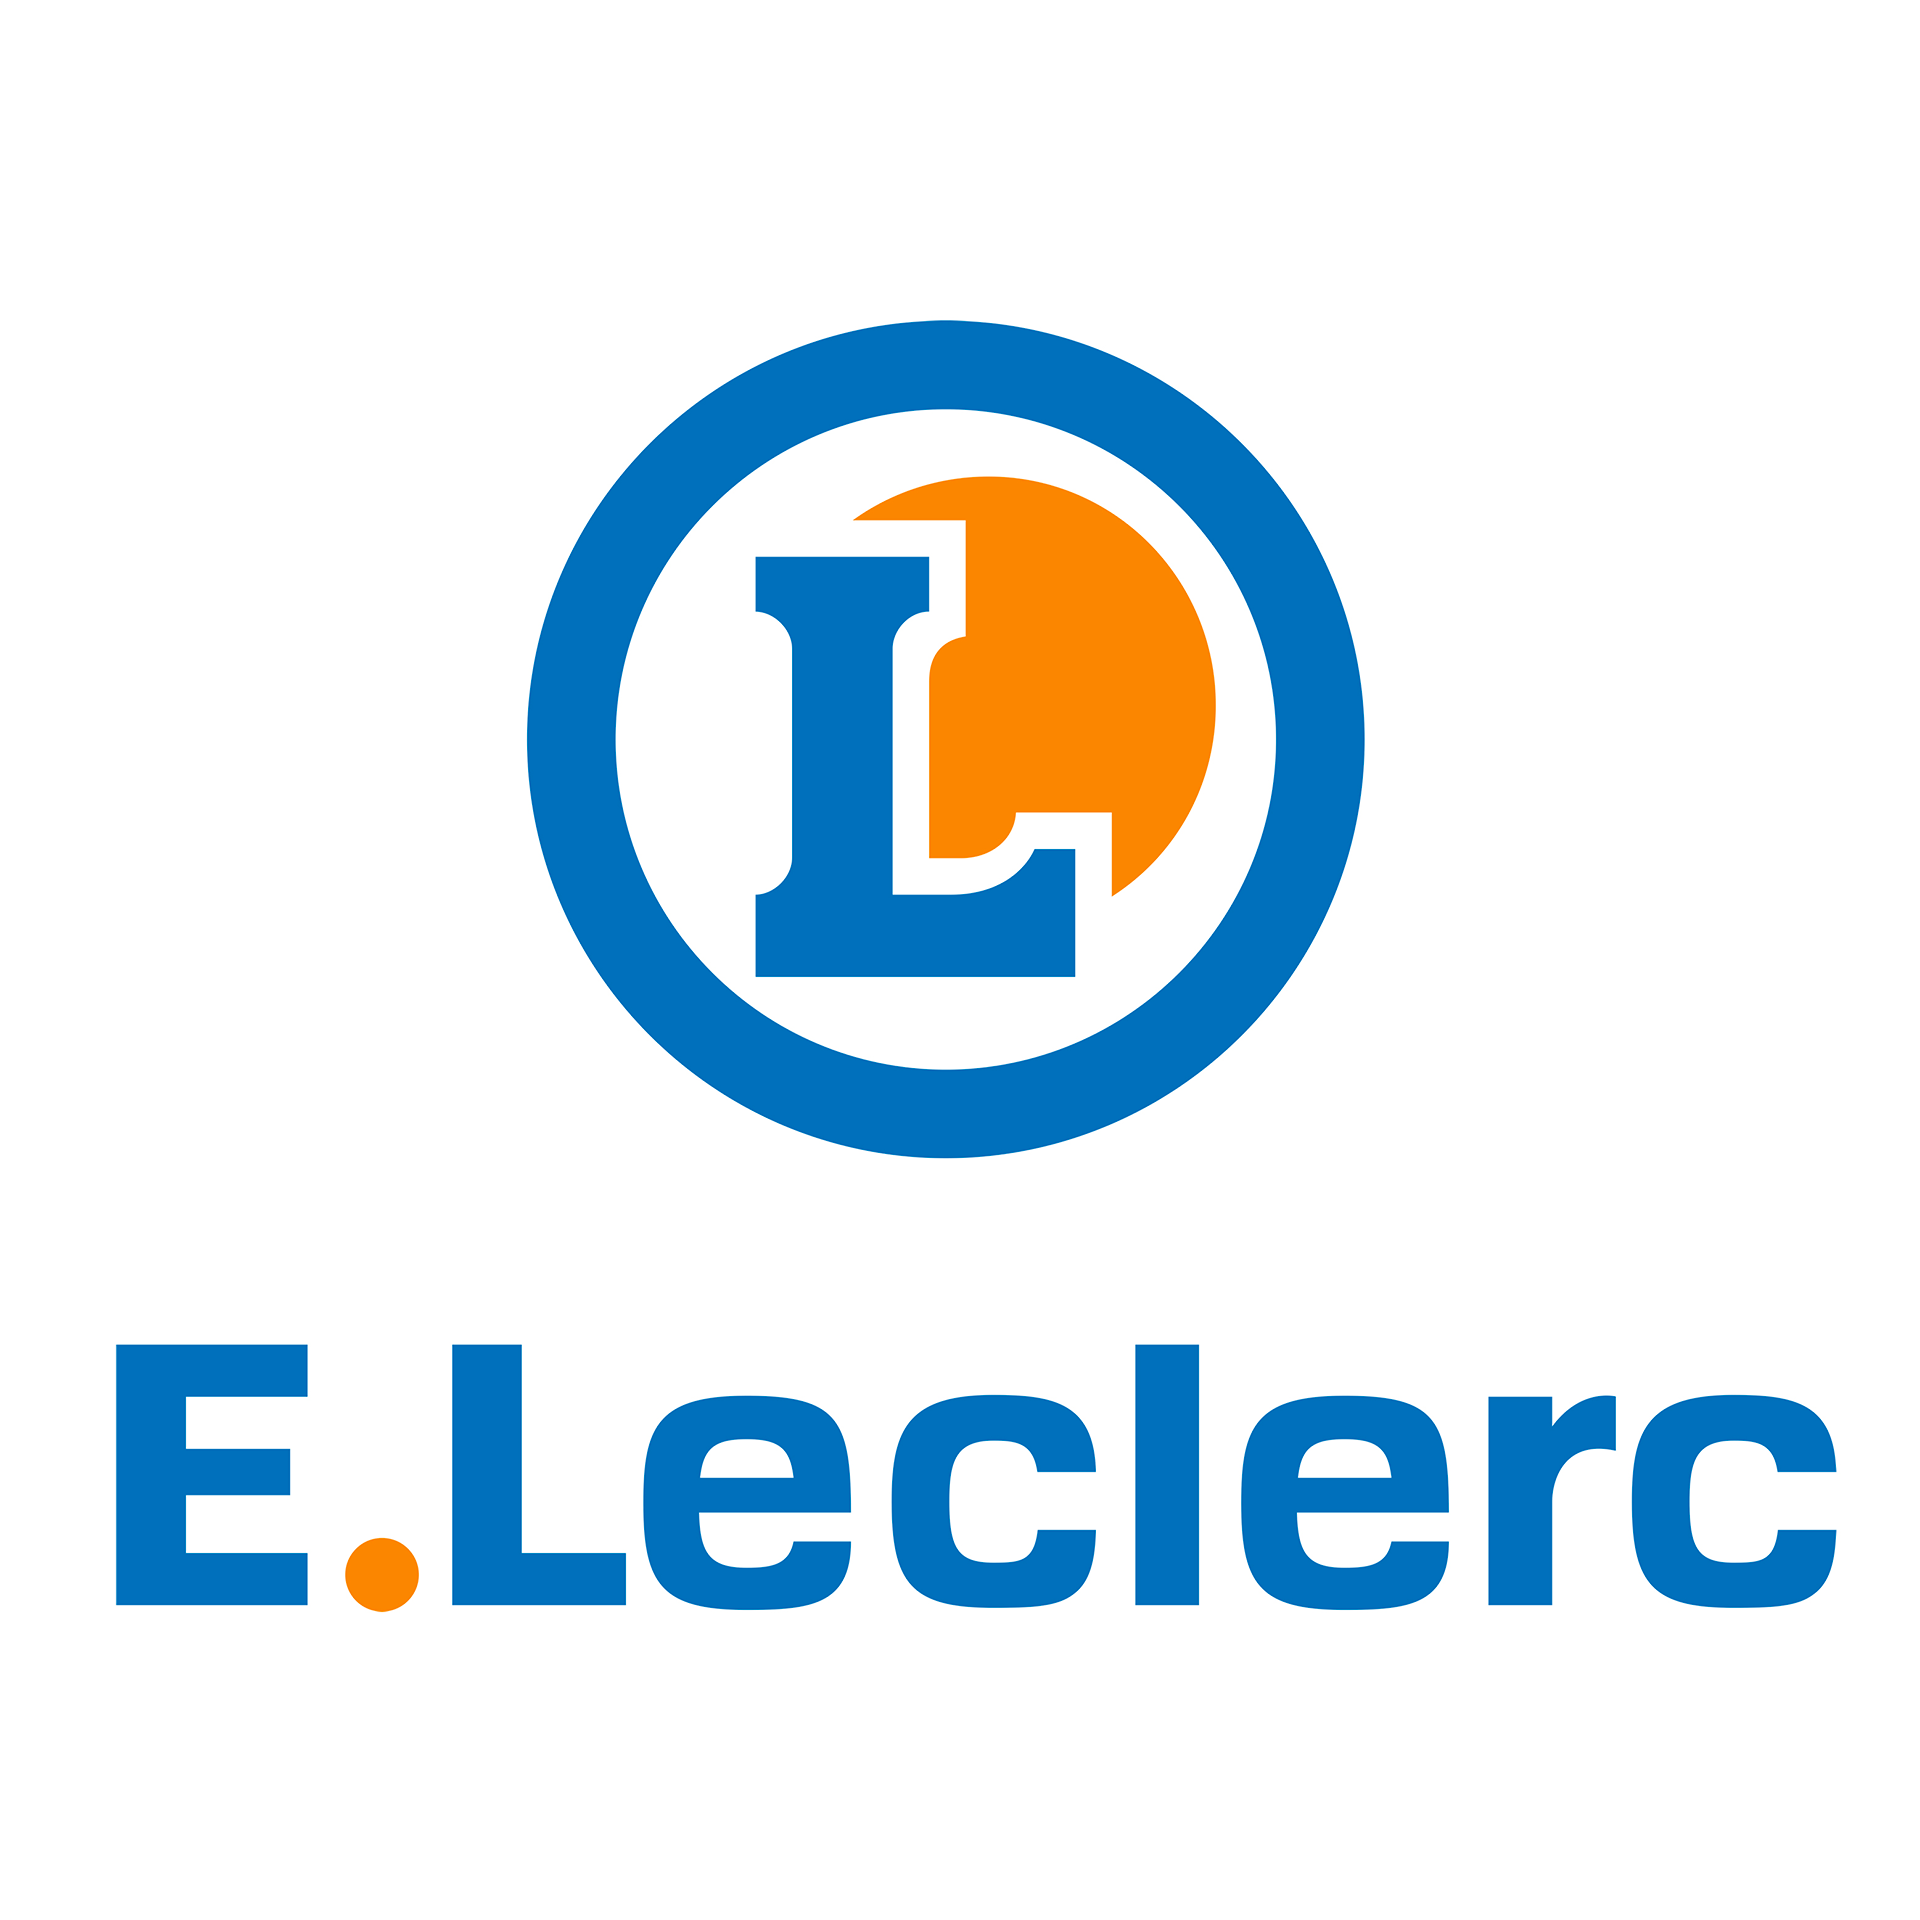 Leclerc logo